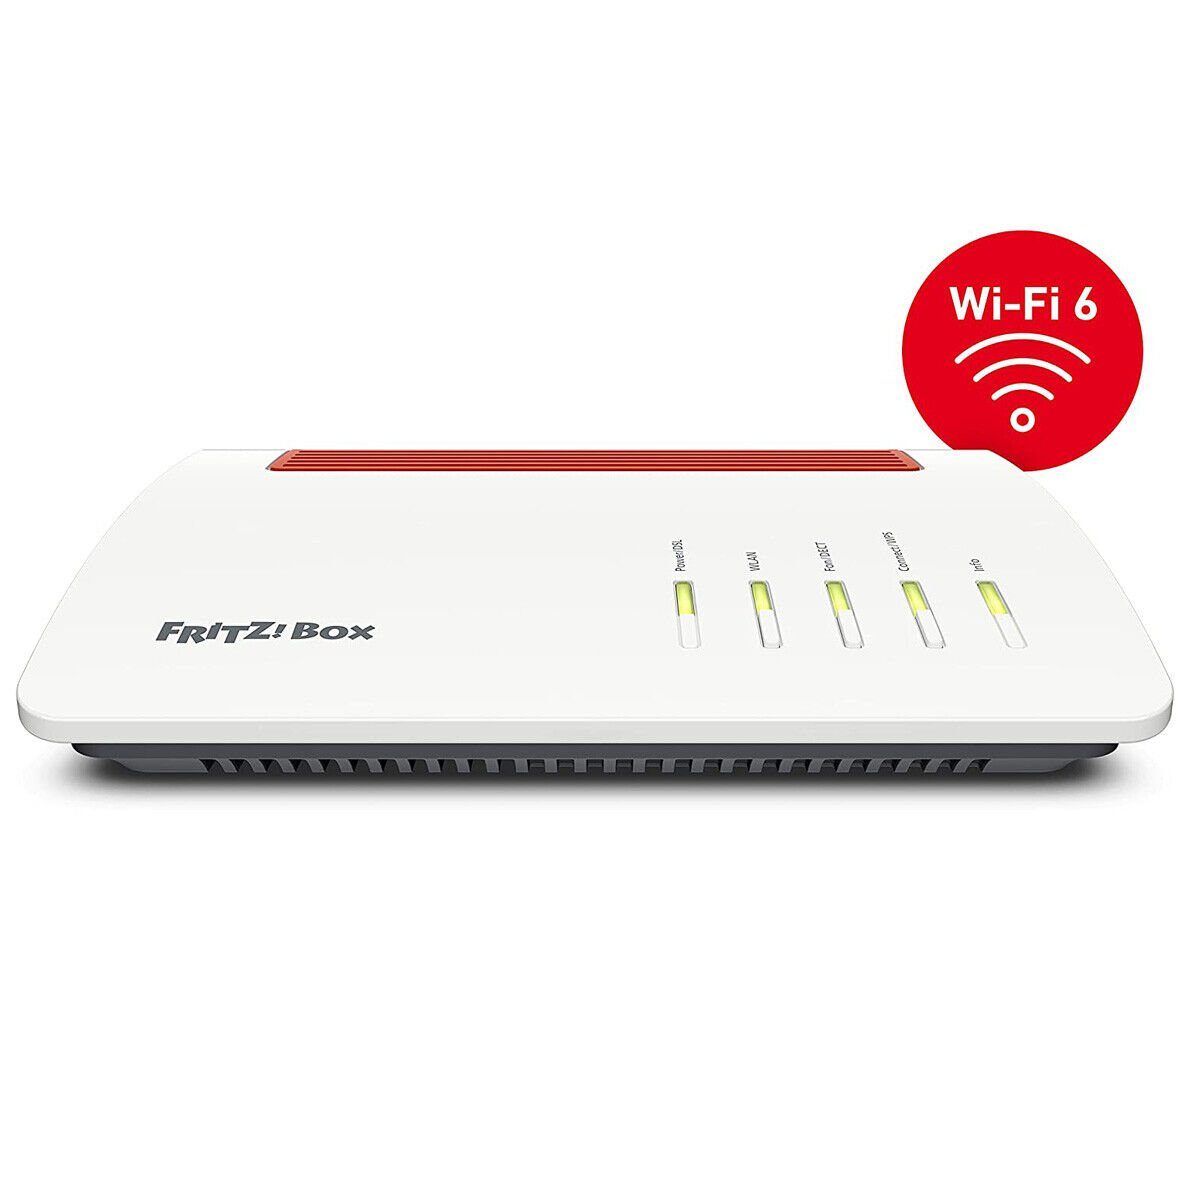 AVM FRITZ!Box 7590 WLAN-Router ISDN AX “V2/Desgin” S0-Anschluss ohne 